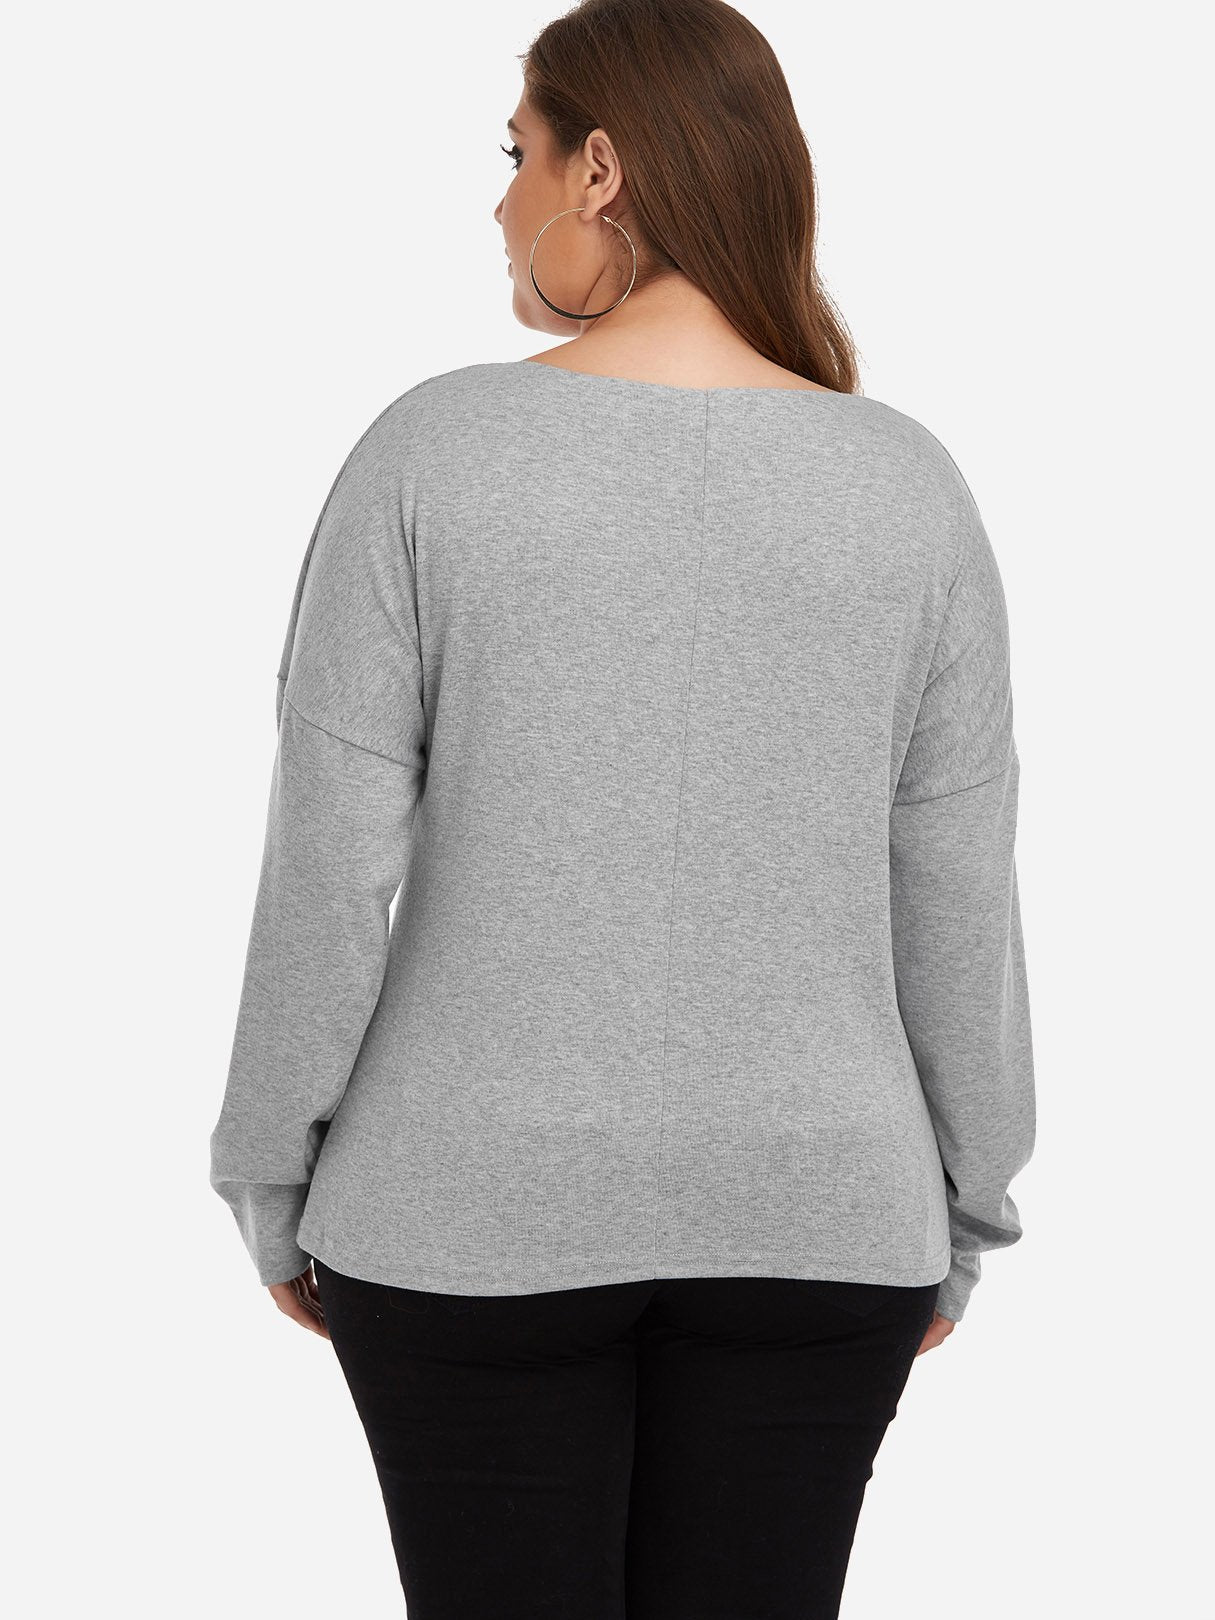 NEW FEELING Womens Grey Plus Size Tops